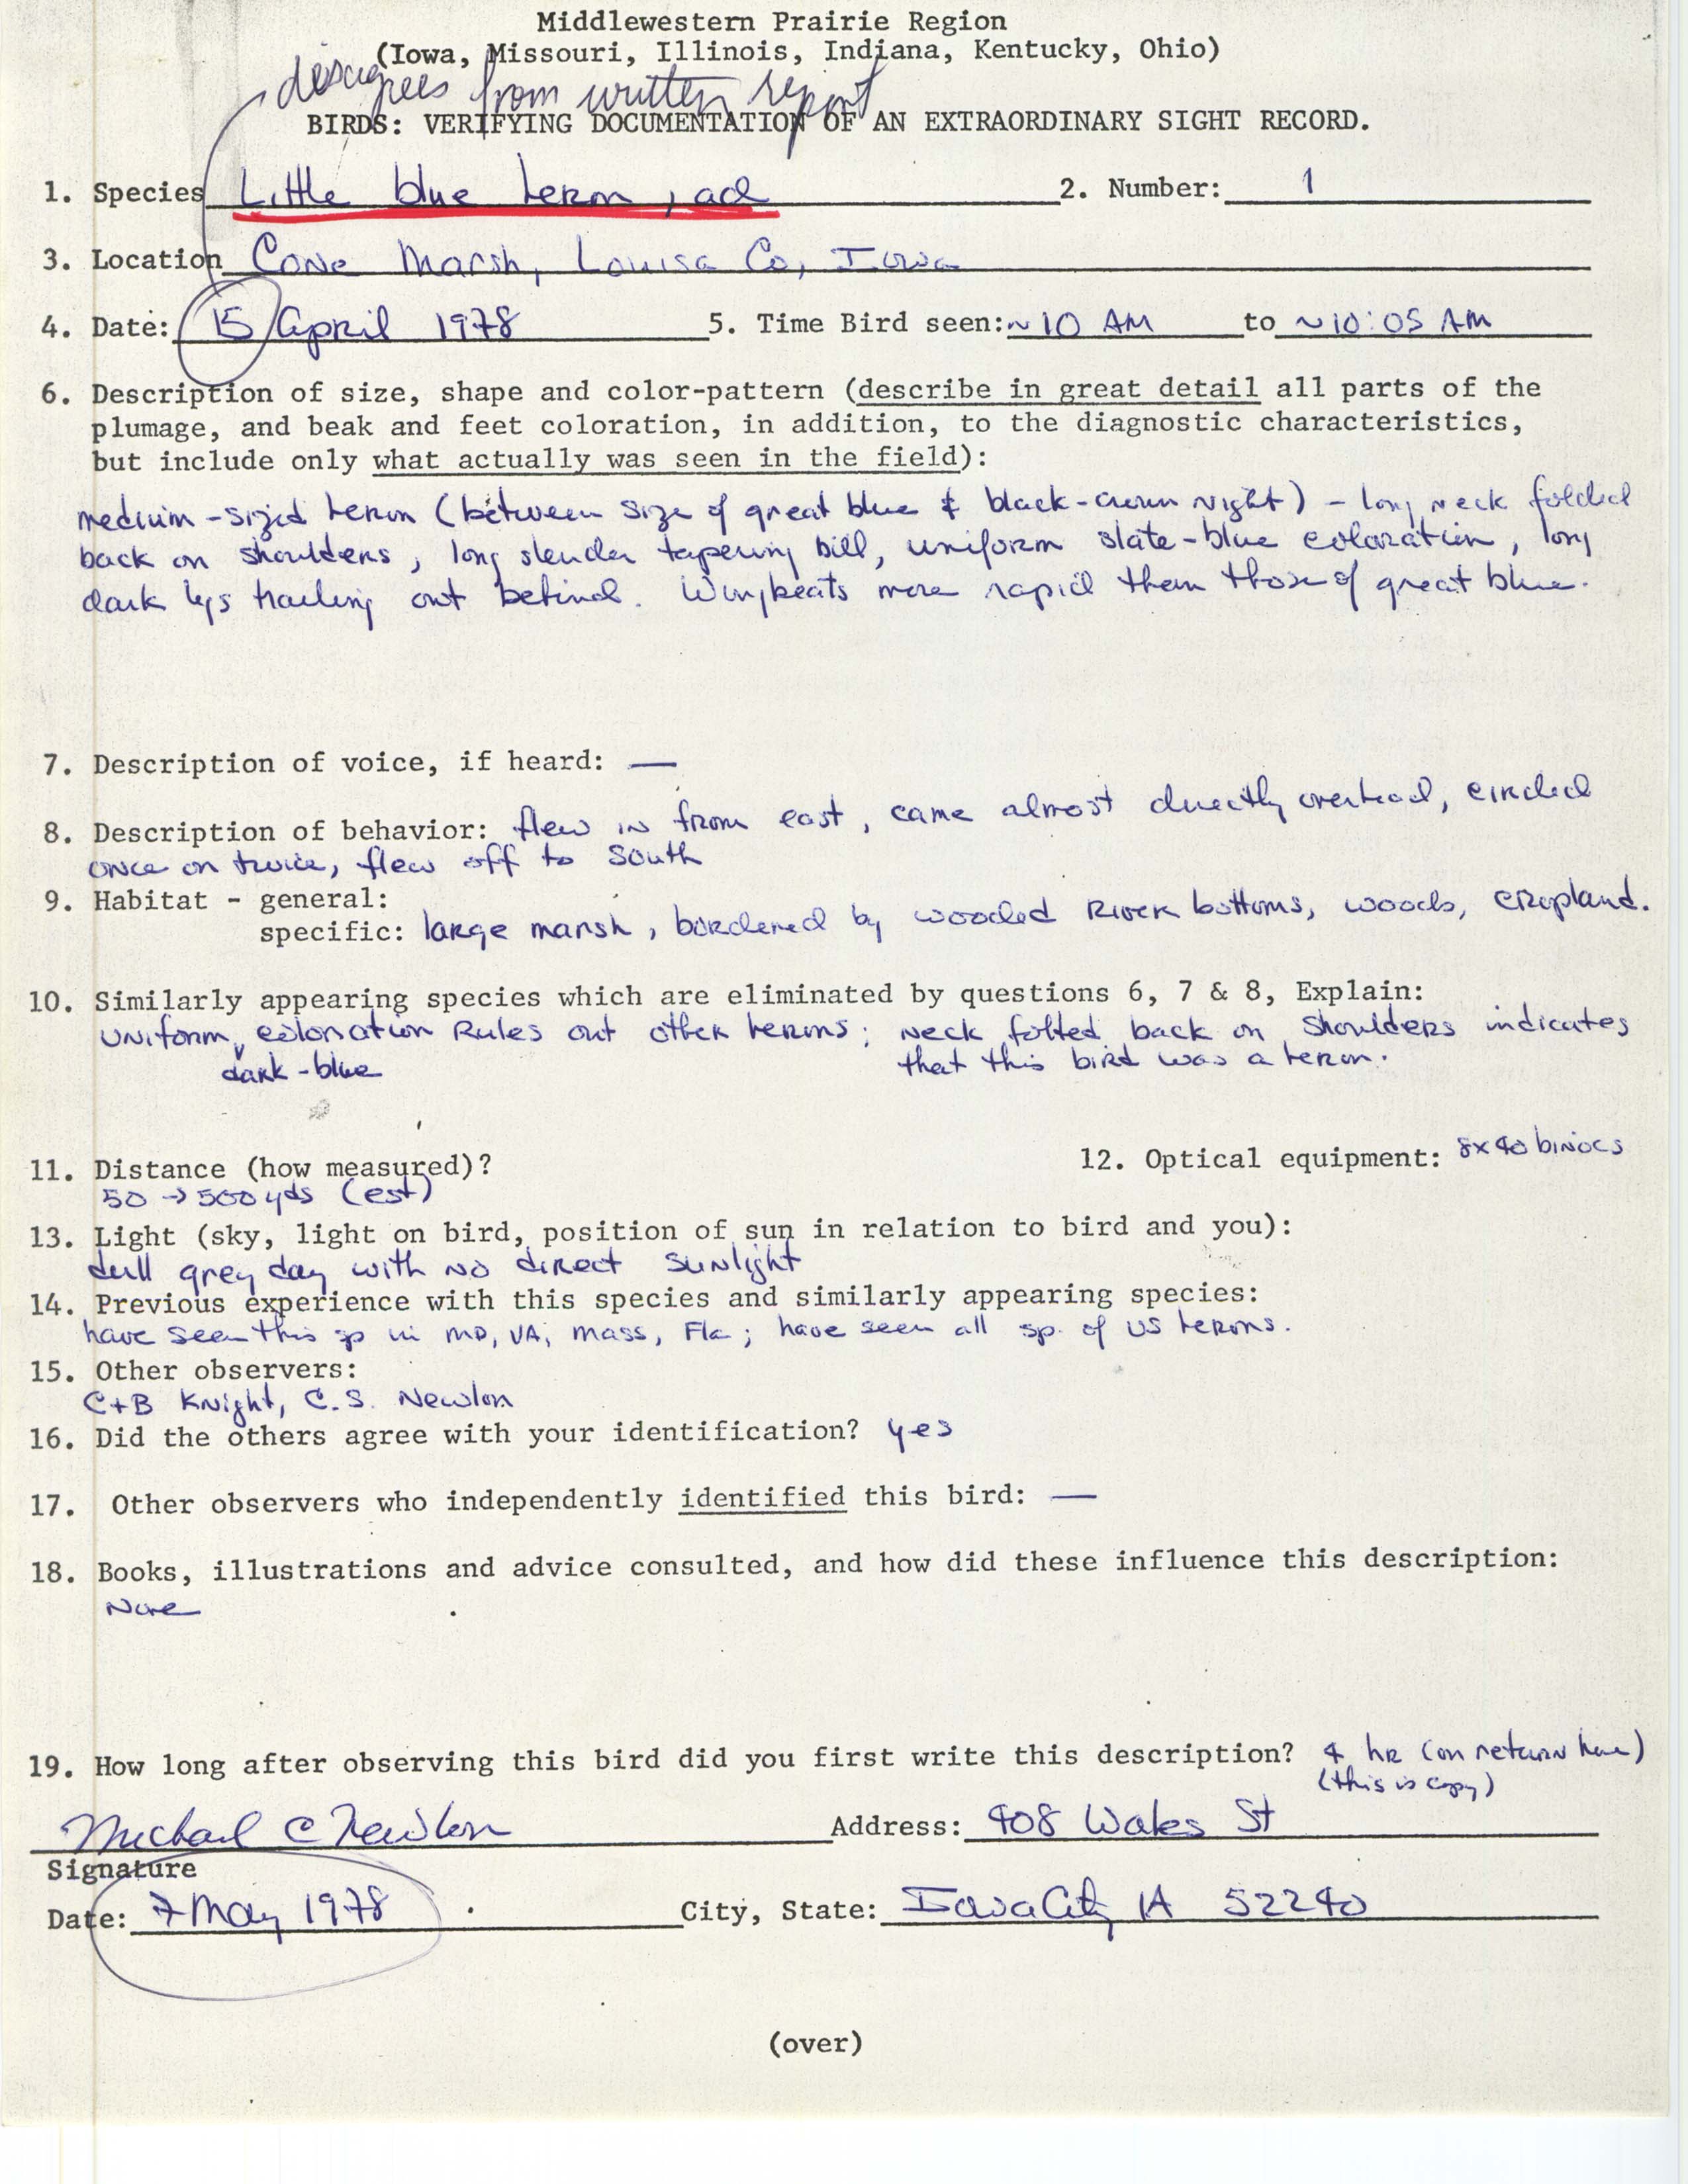 Rare bird documentation form for Little Blue Heron at Cone Marsh, 1978